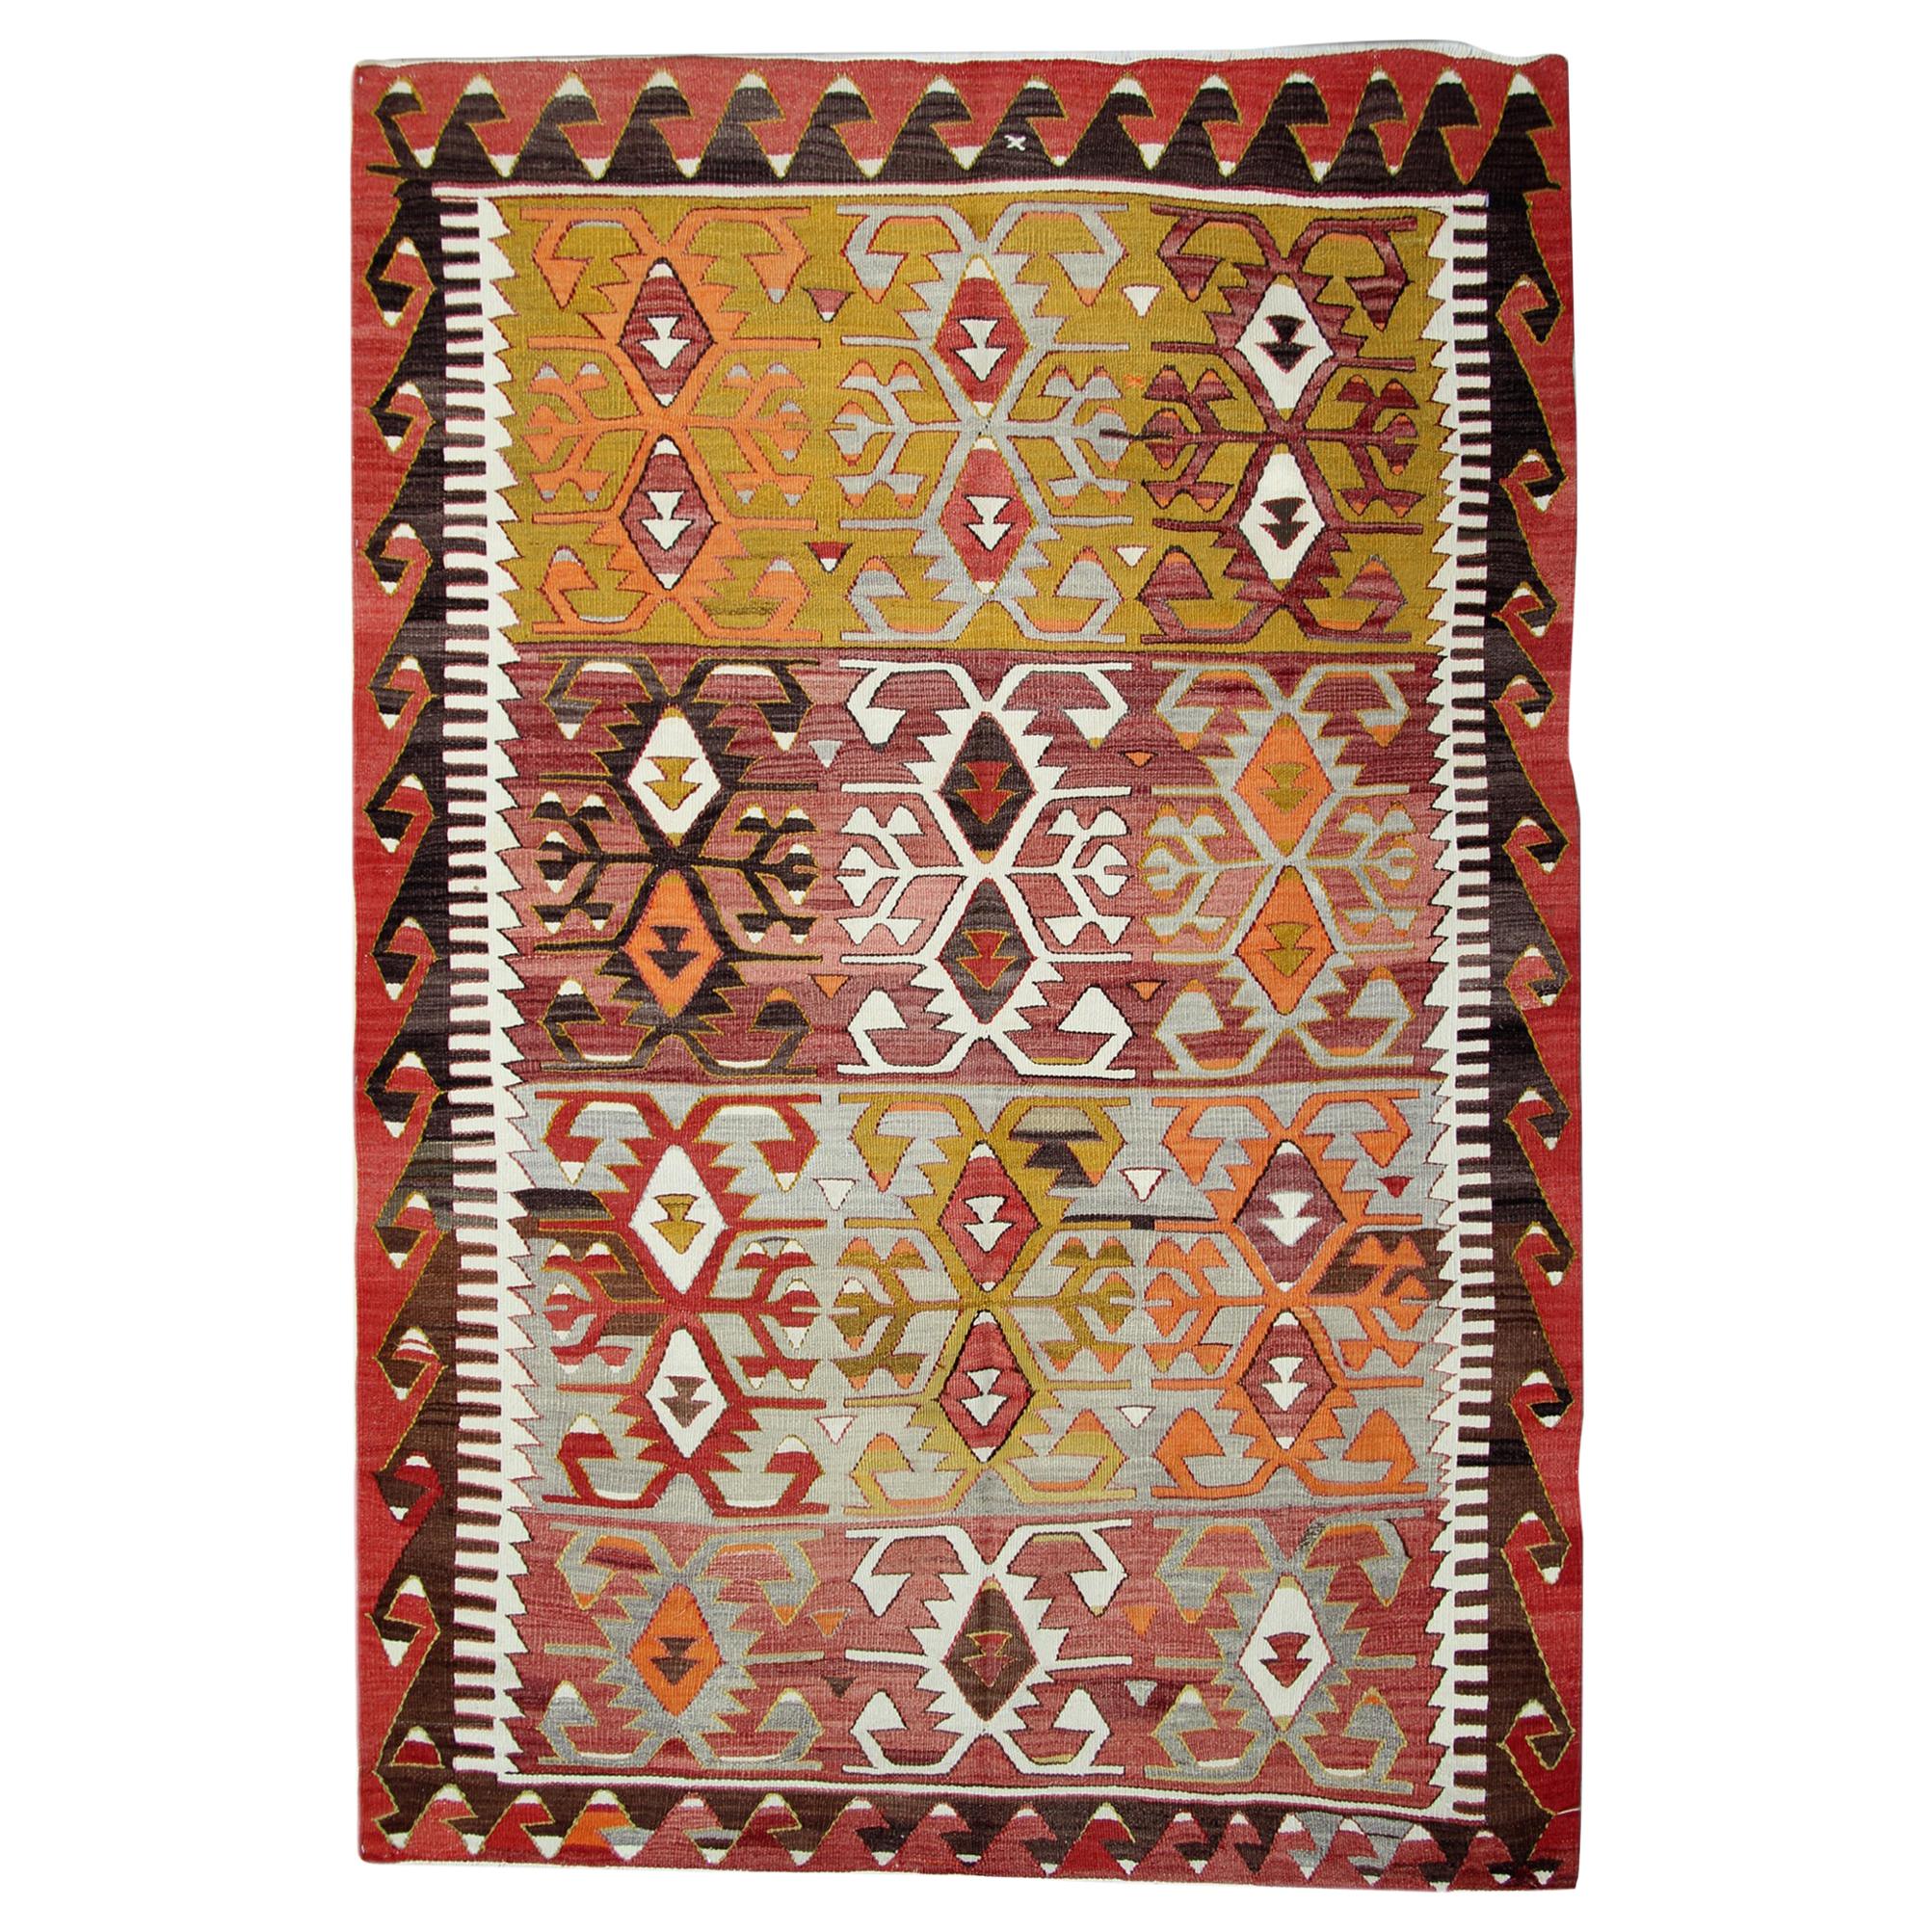 Antique Kilim Rugs, Traditional Oriental Rugs, Turkish Handmade Carpet for Sale